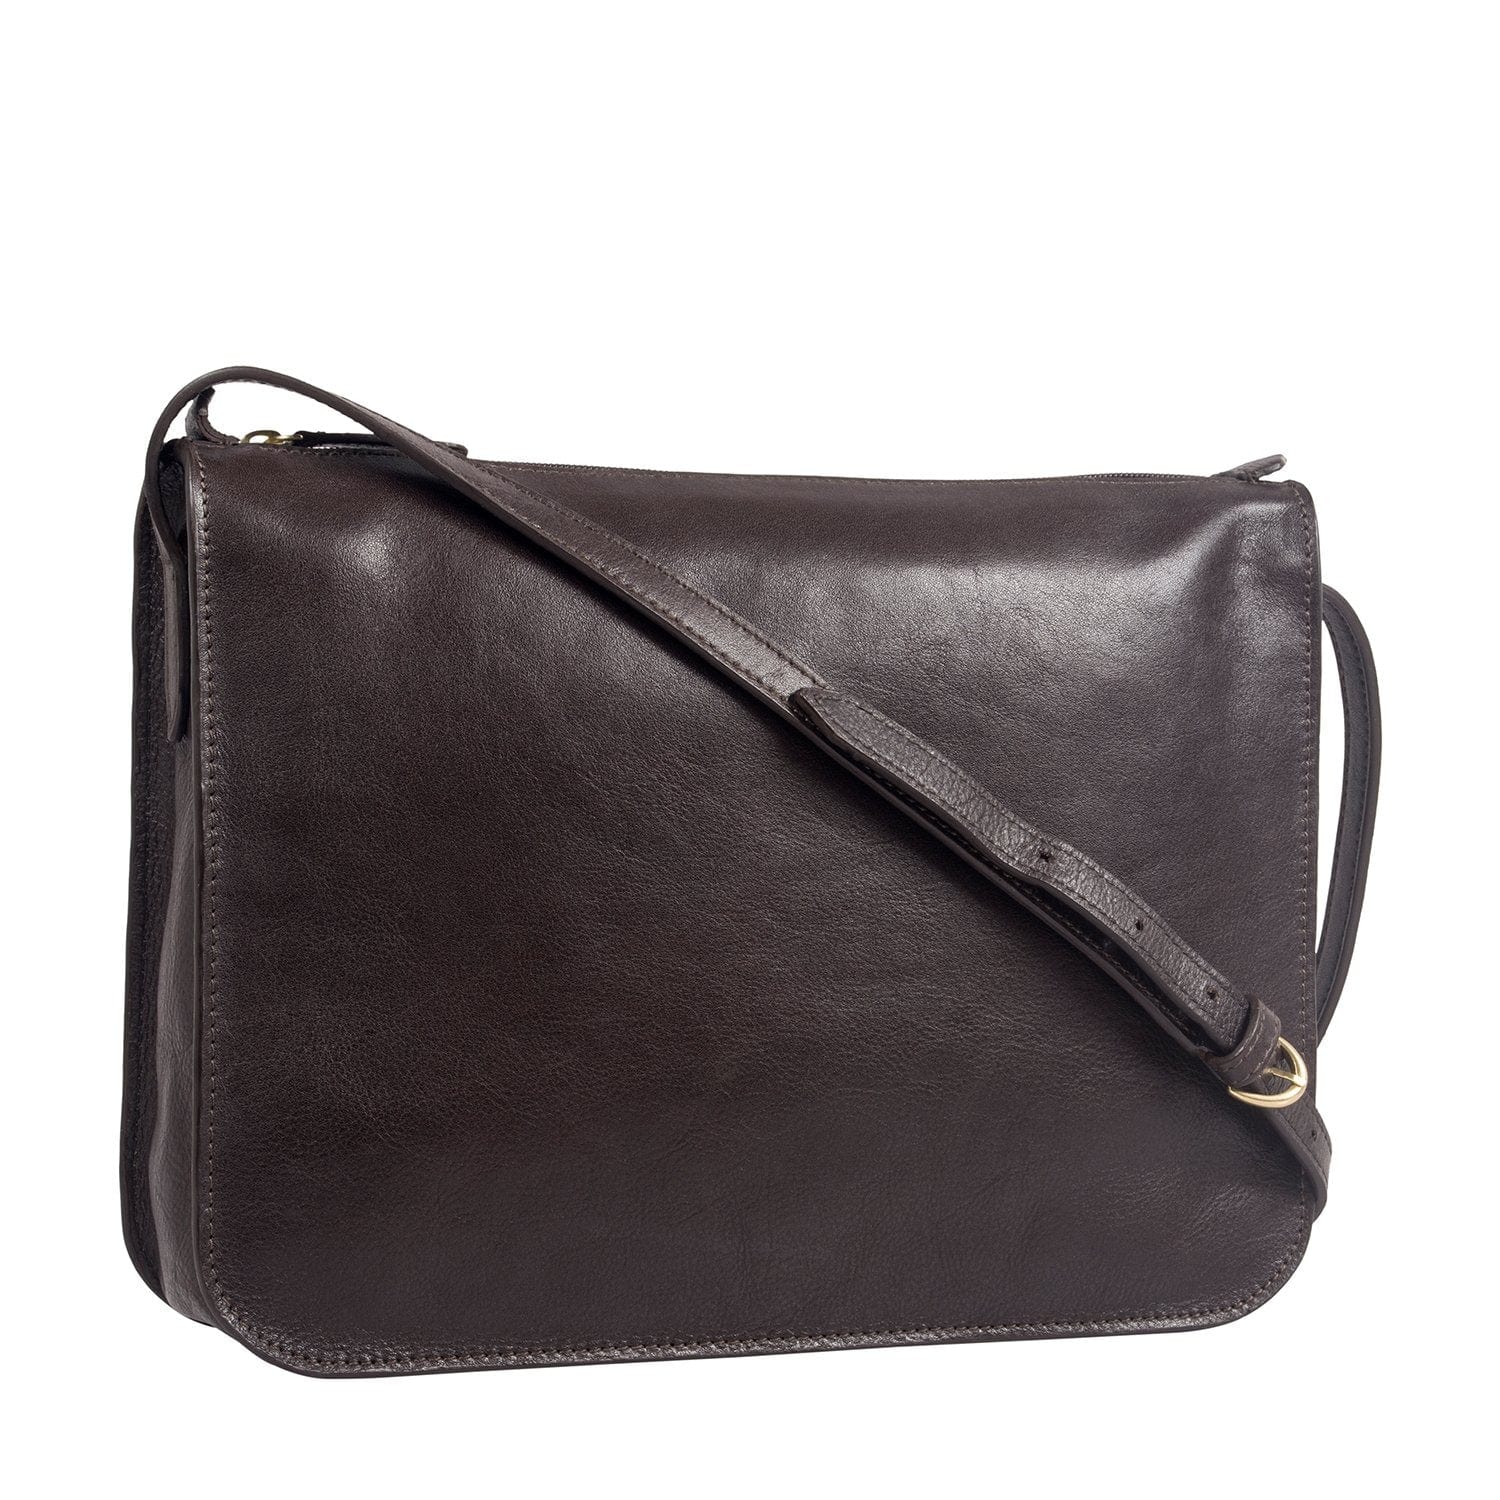 Carmel Medium Leather Sling Bag